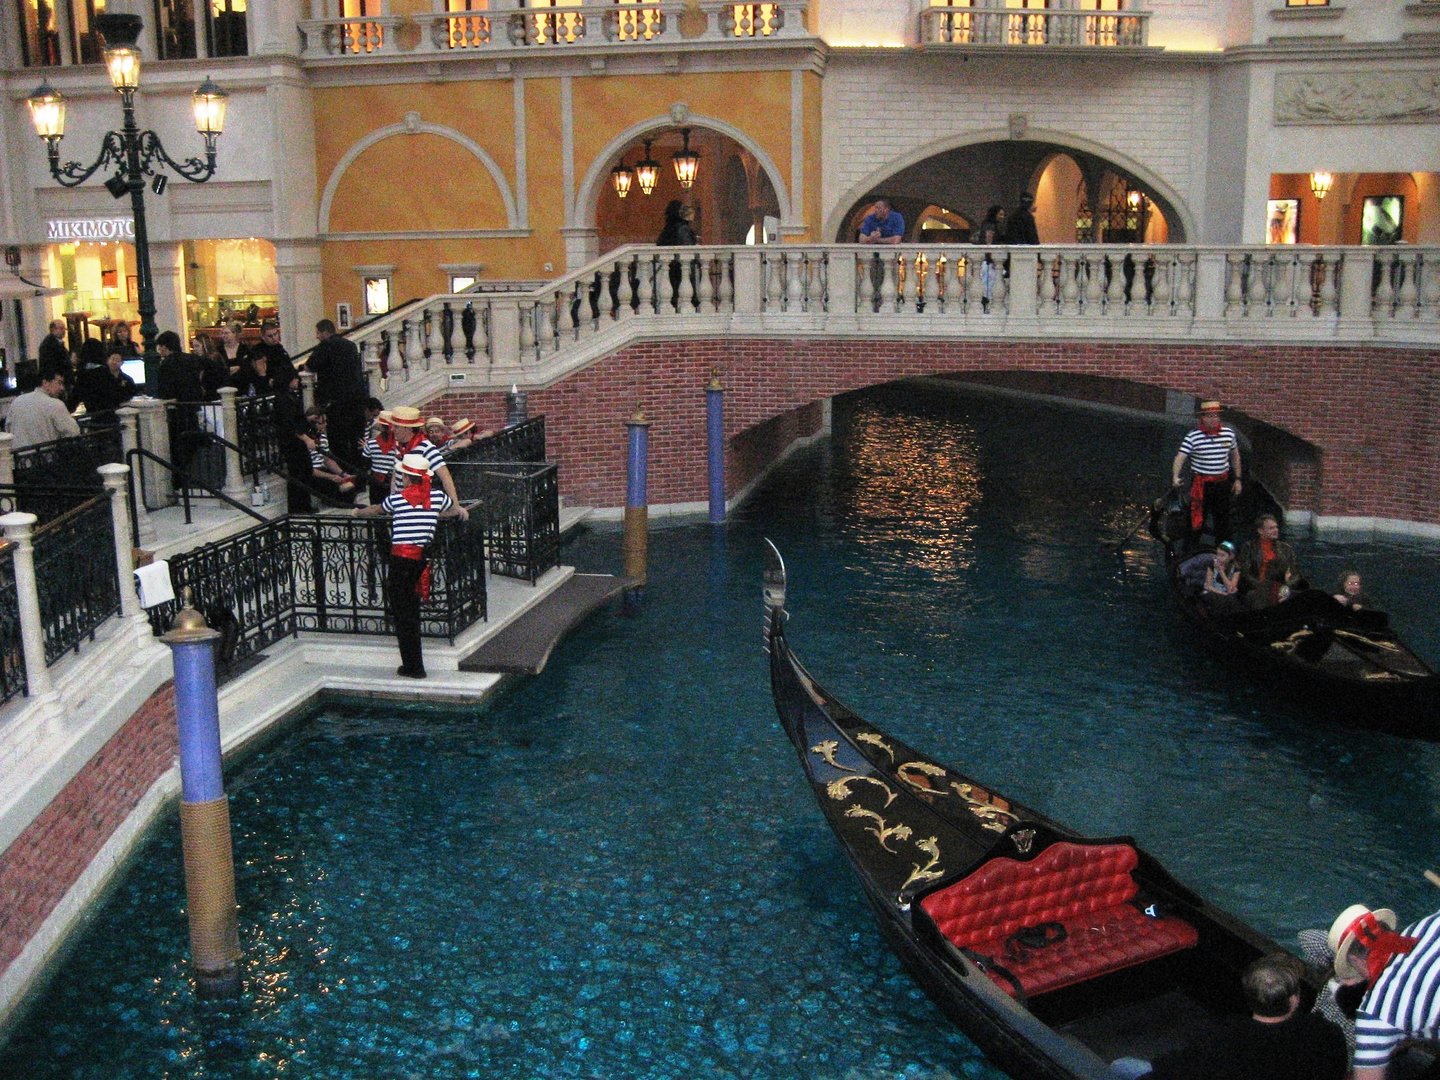 Inside the Venetian Hotel in Las Vegas, Nevada